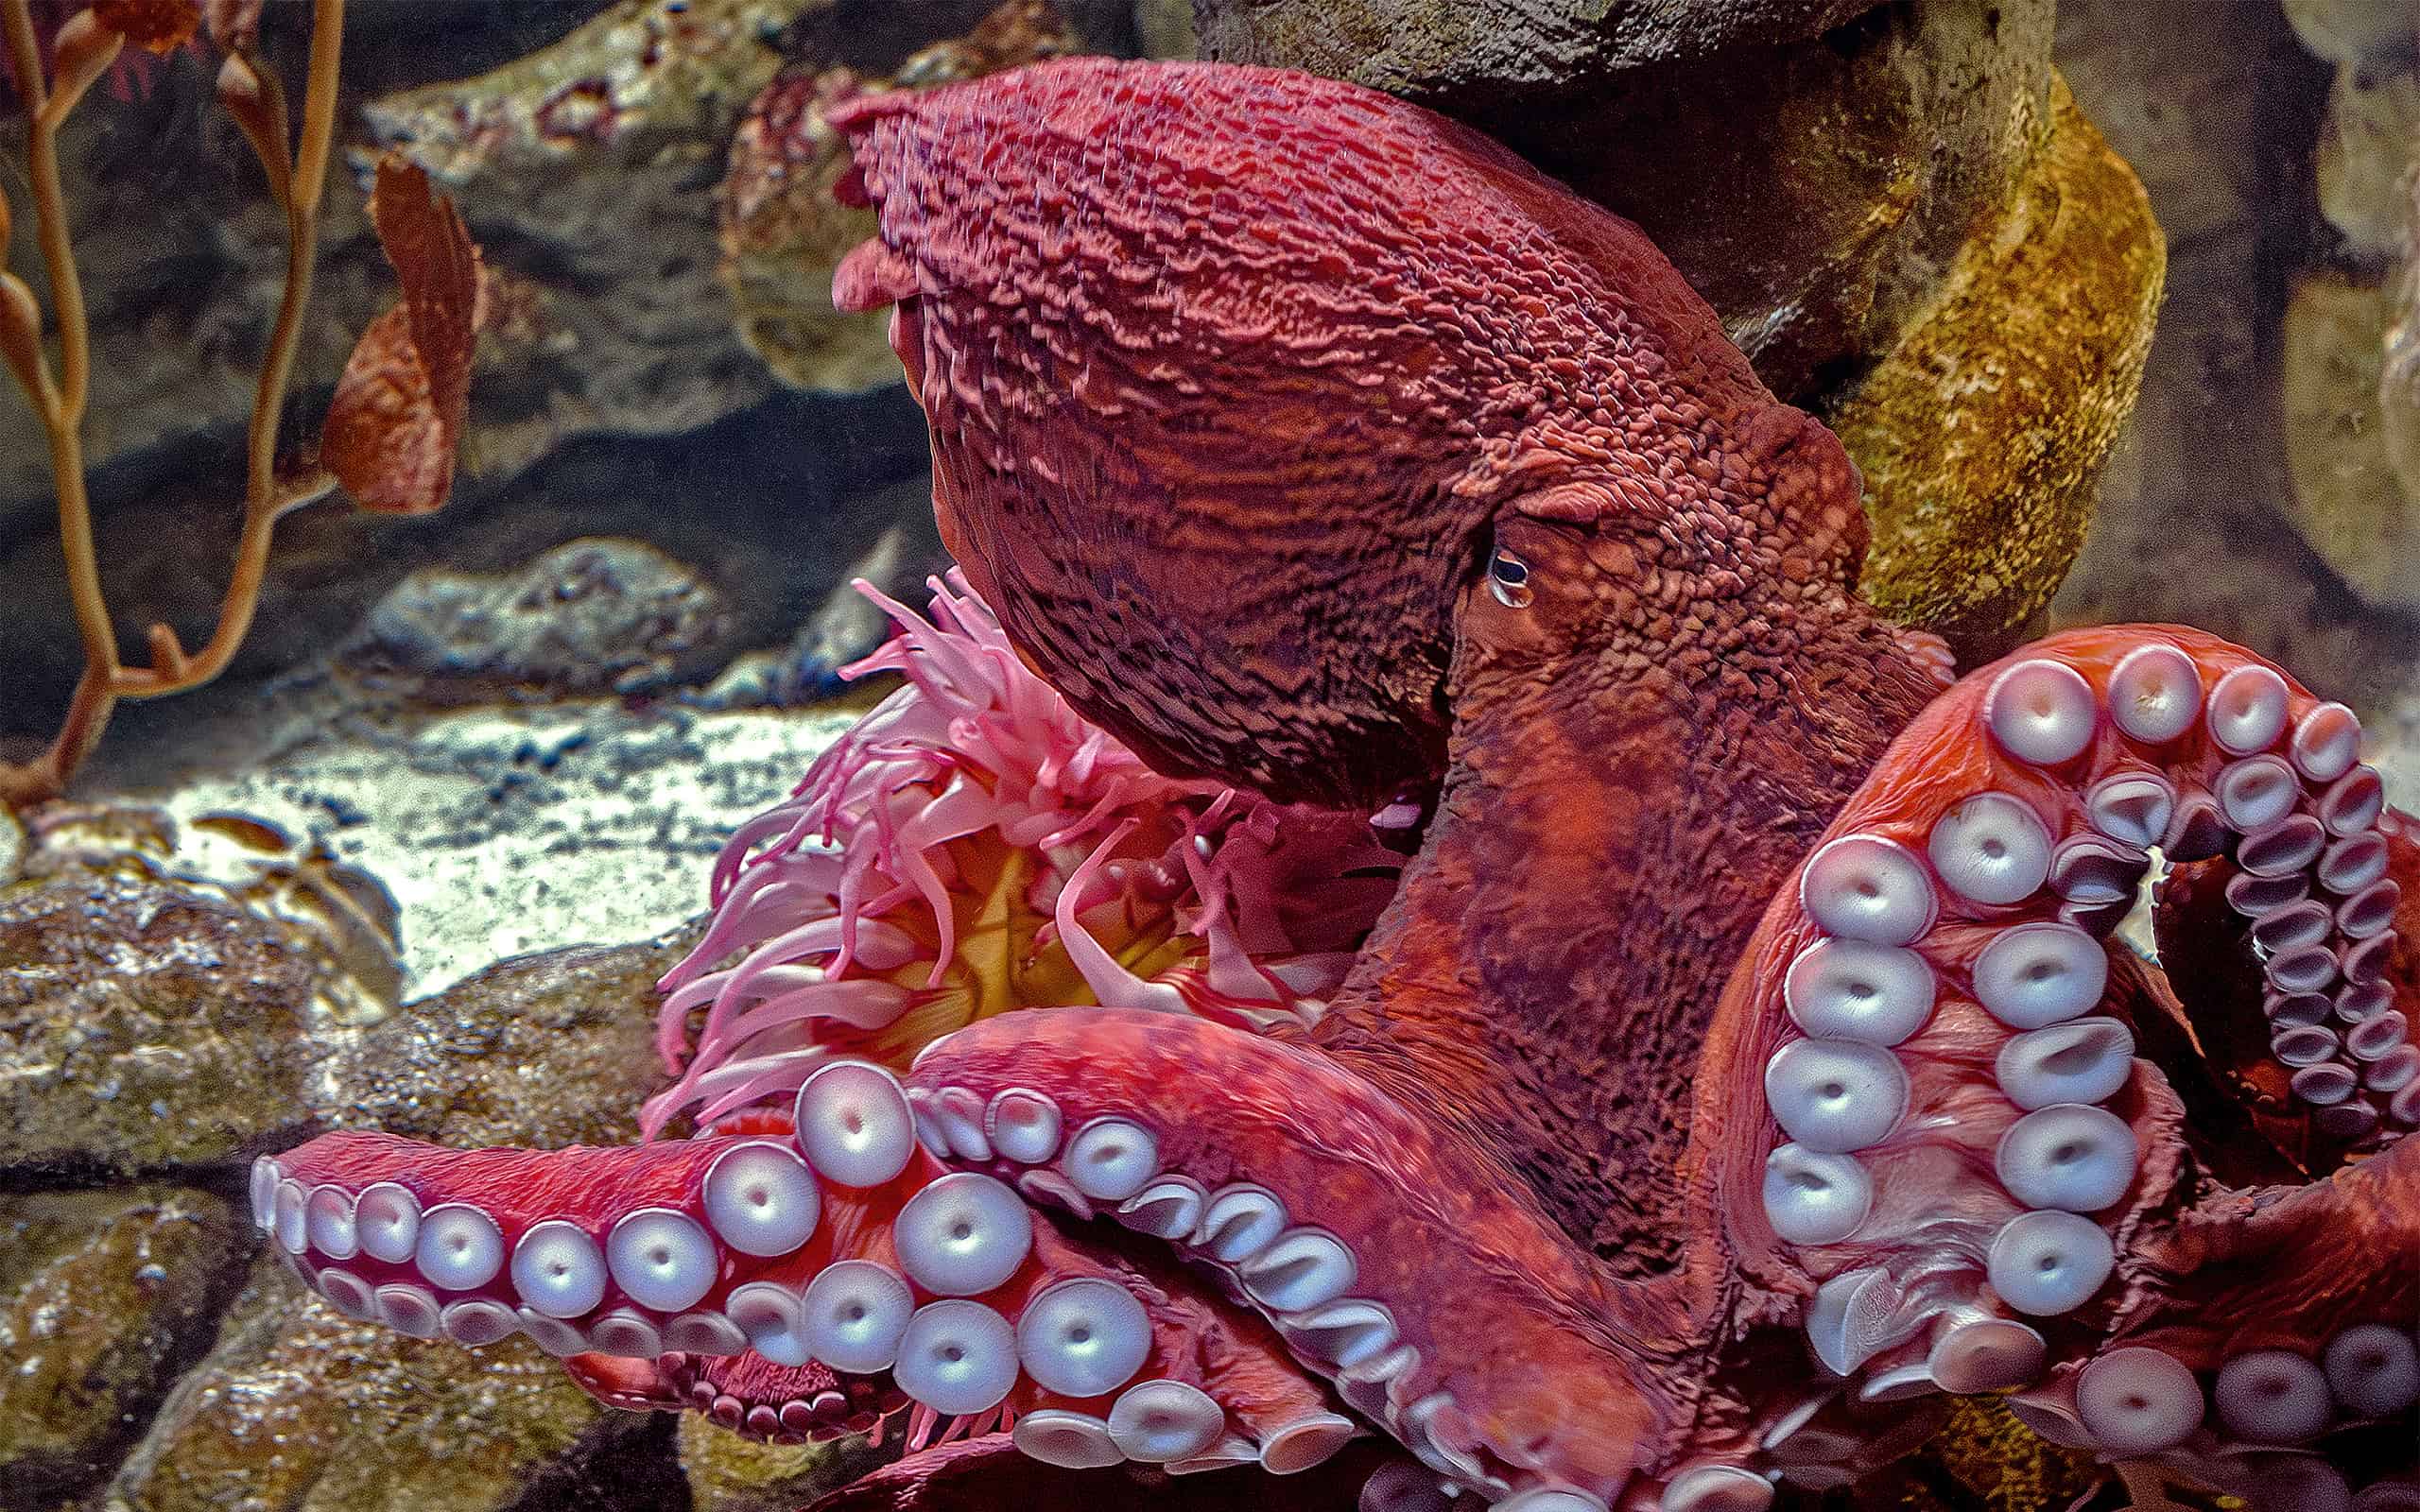 Giant Pacific Octopus - Enteroctopus dofleini